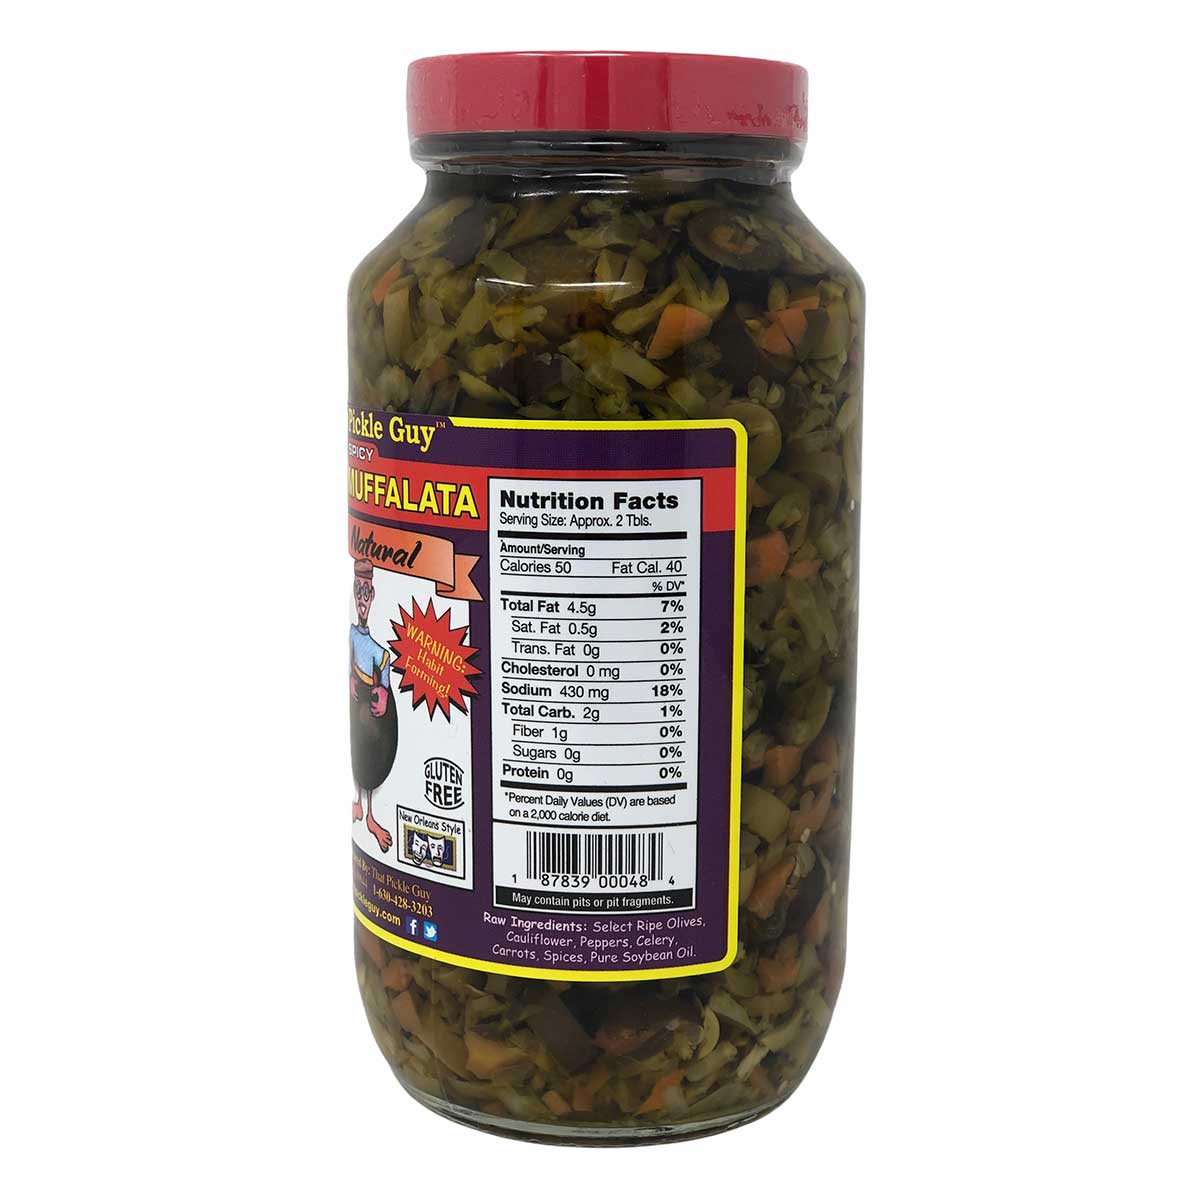 That Pickle Guy Classic Olive Muffalata Mix 32 oz Jar